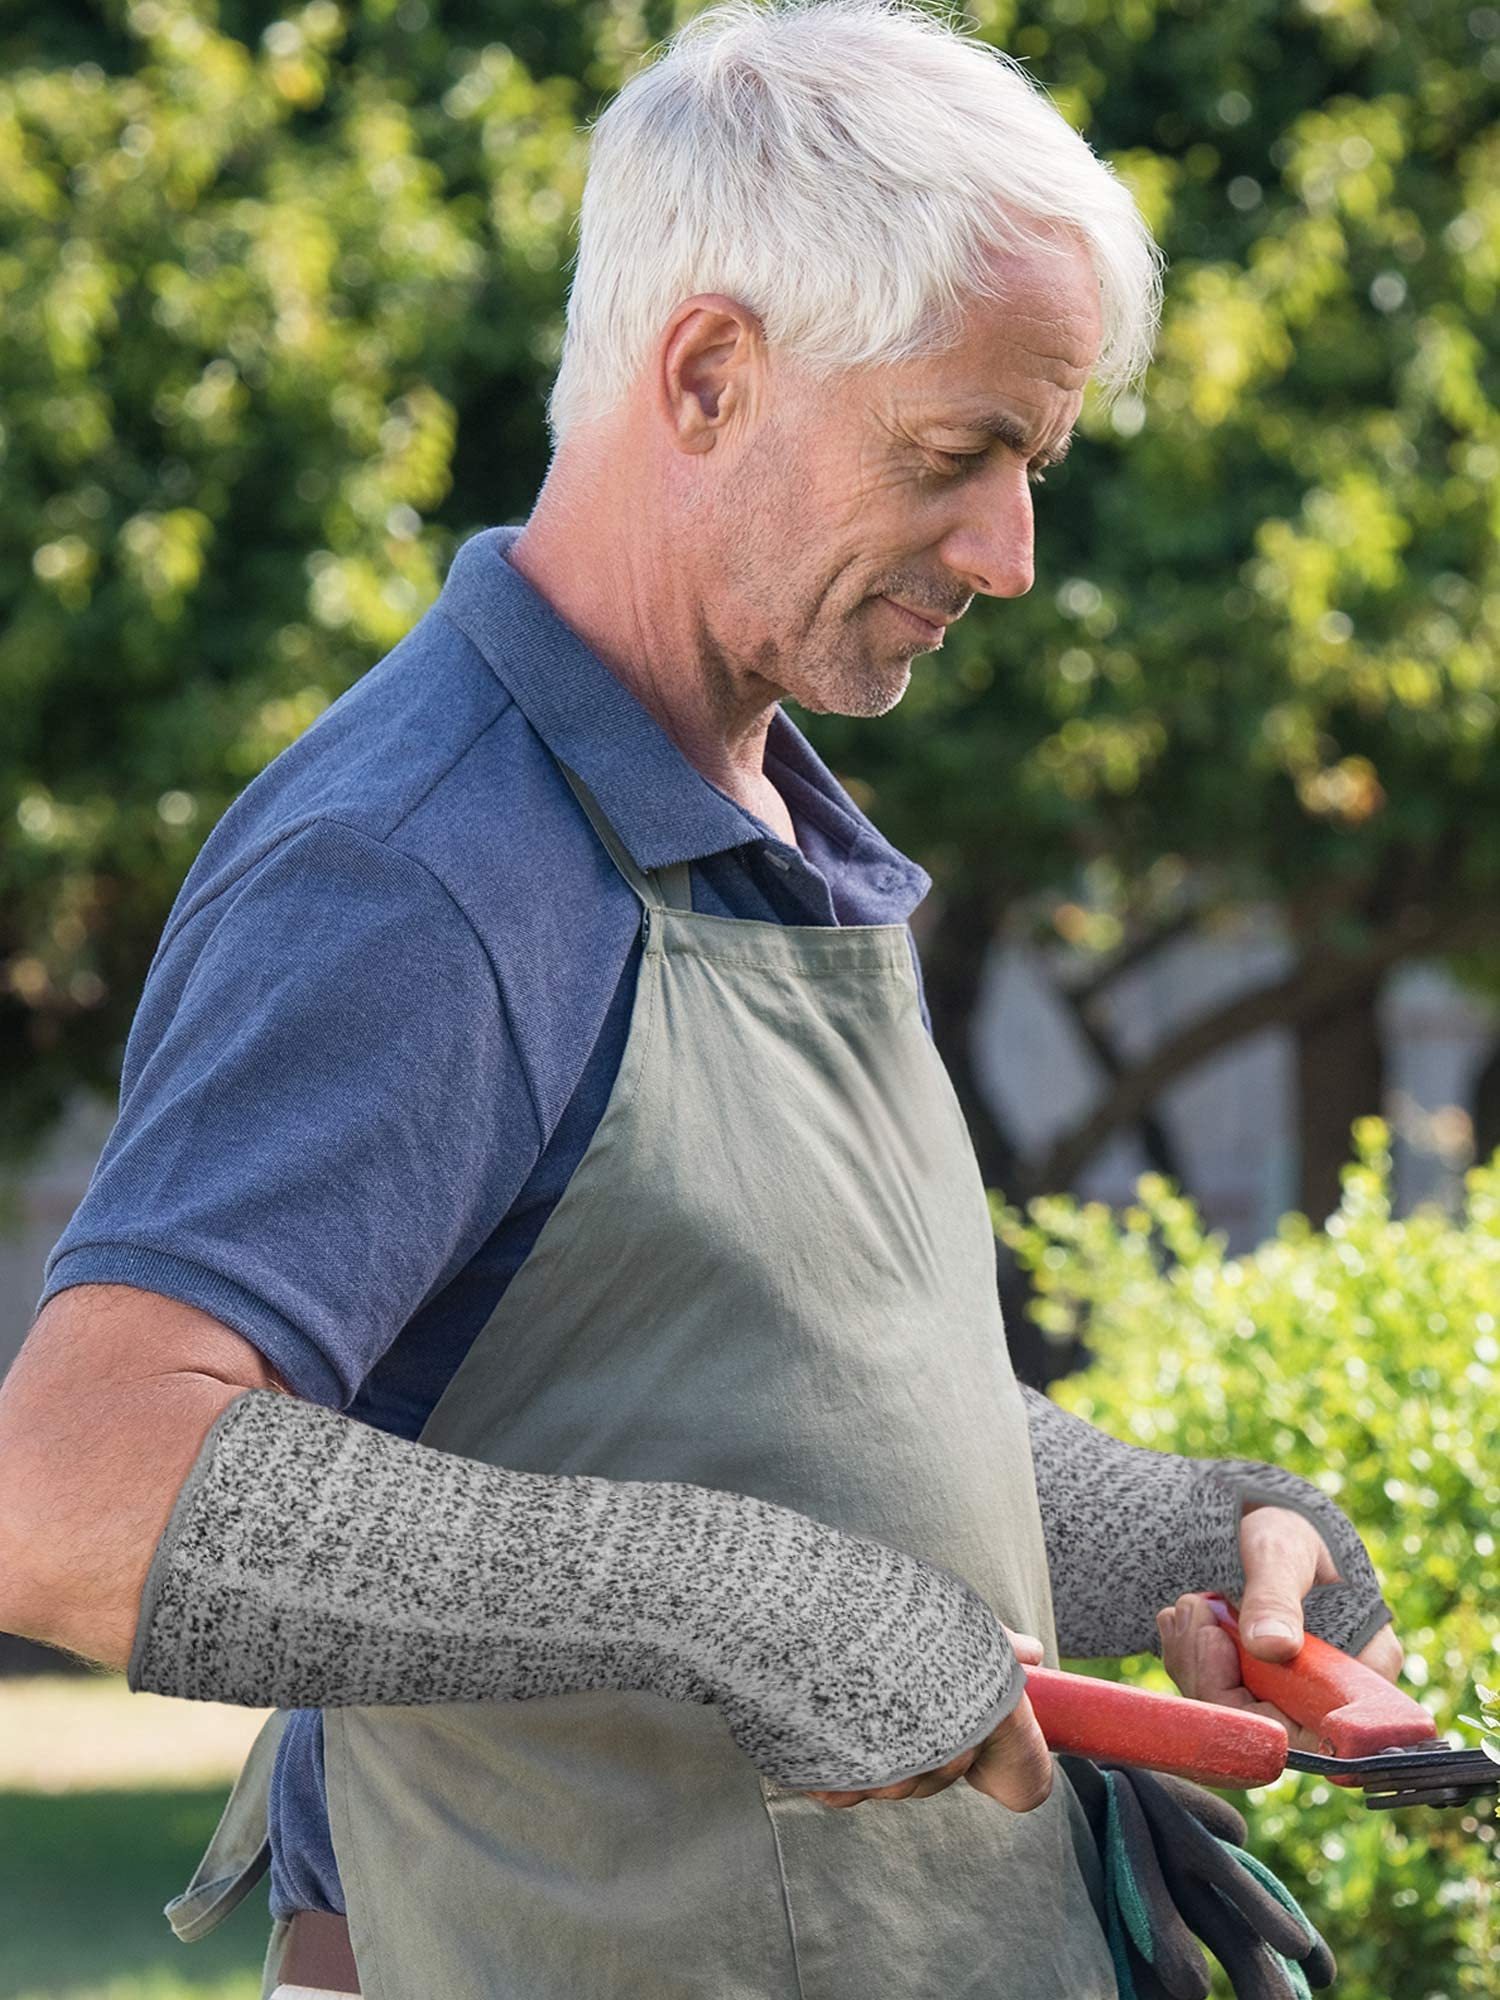 SATINIOR 2 Pairs Cut Resistant Sleeves Protective Arm Sleeves Safety Arms Protection Sleeves with Thumb Hole,for Garden Kitchen (Black, Gray), Medium